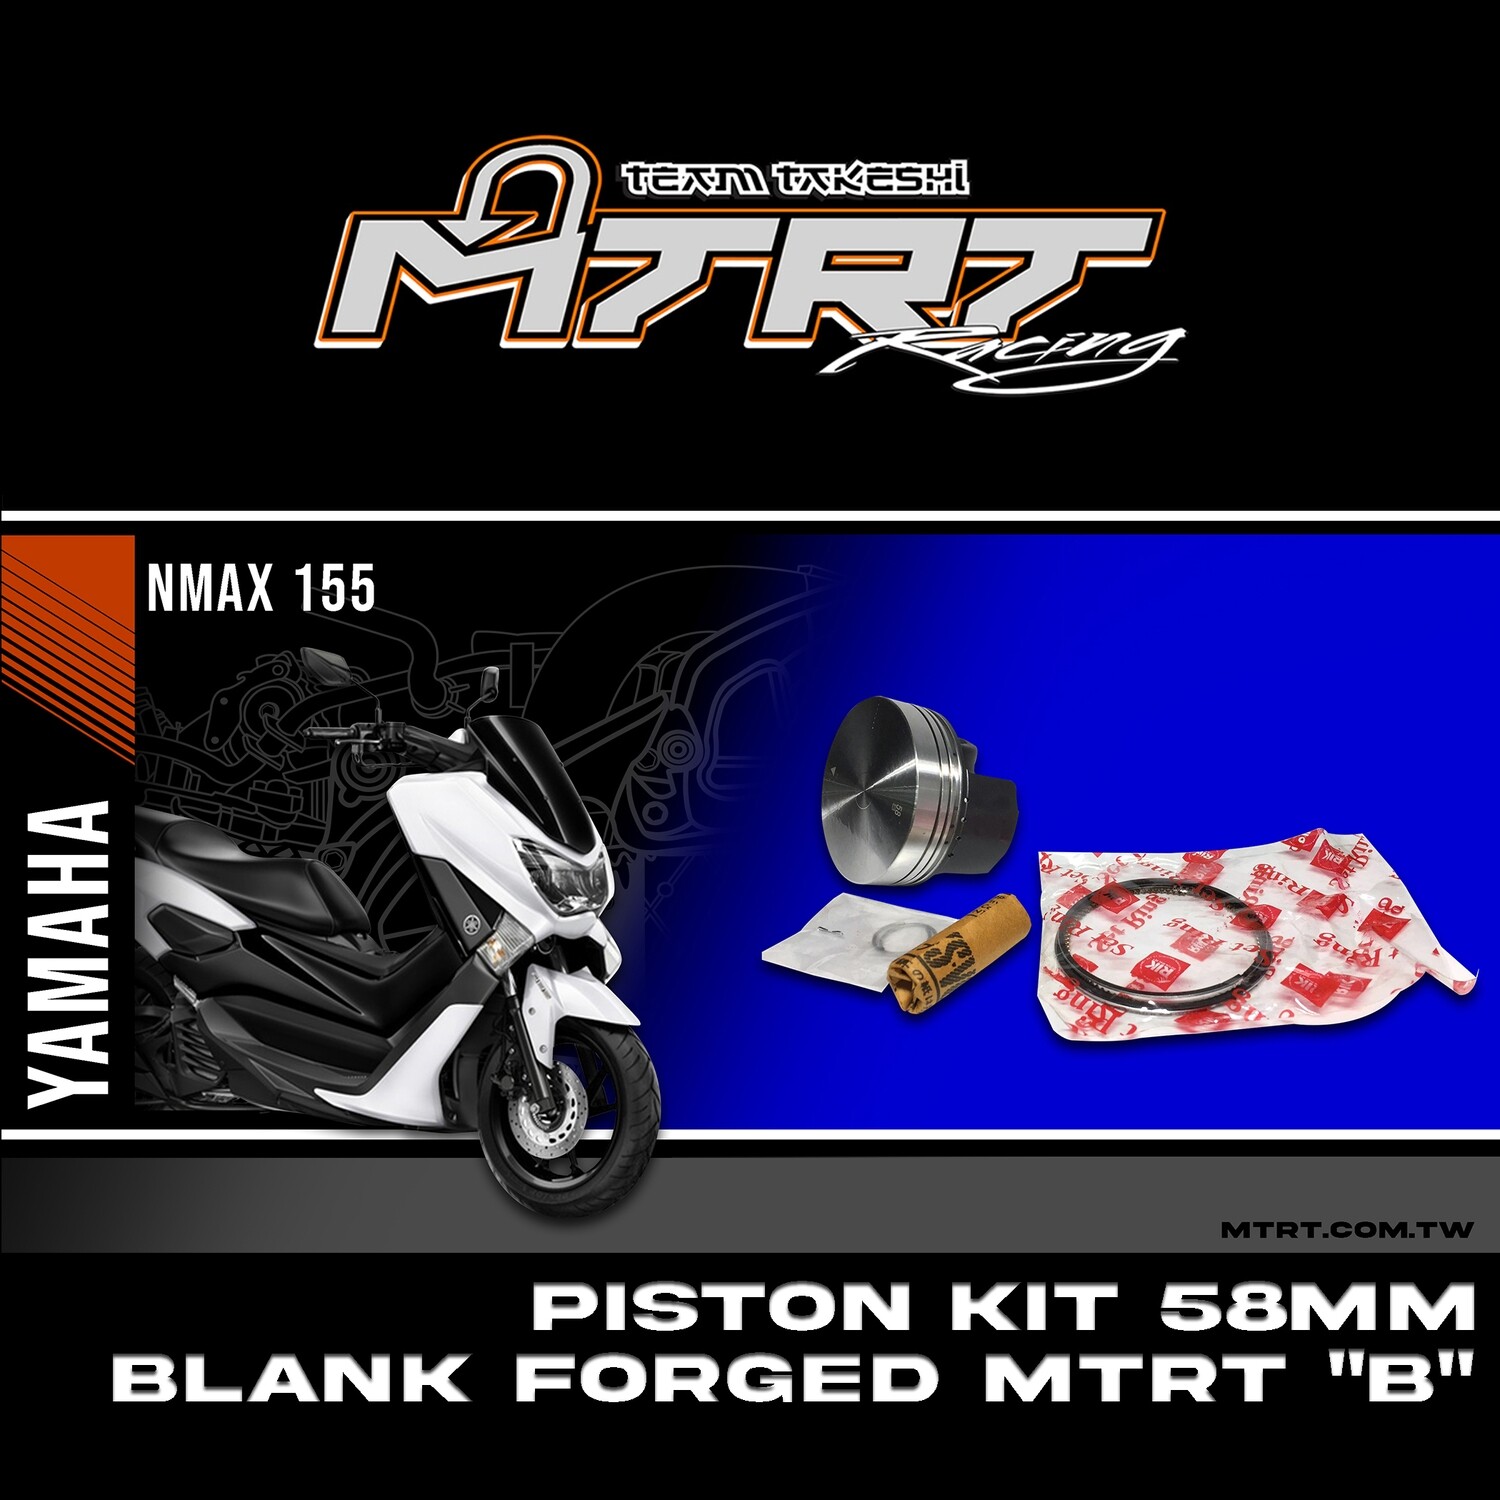 PISTON KIT 58mm Blank Forged MTRT "B"